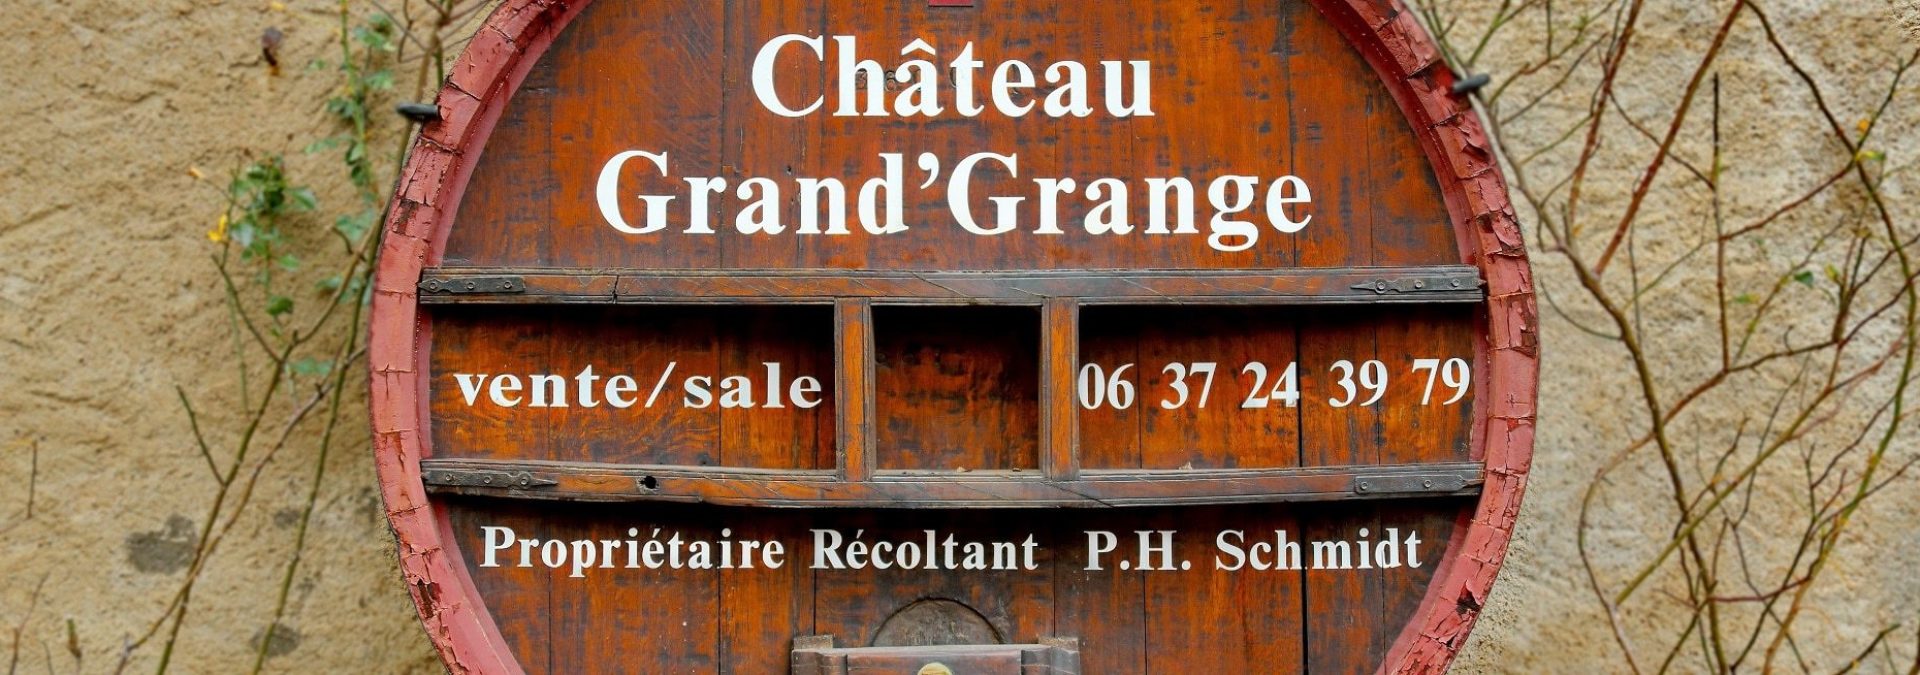 Chateau Grand’ Grange